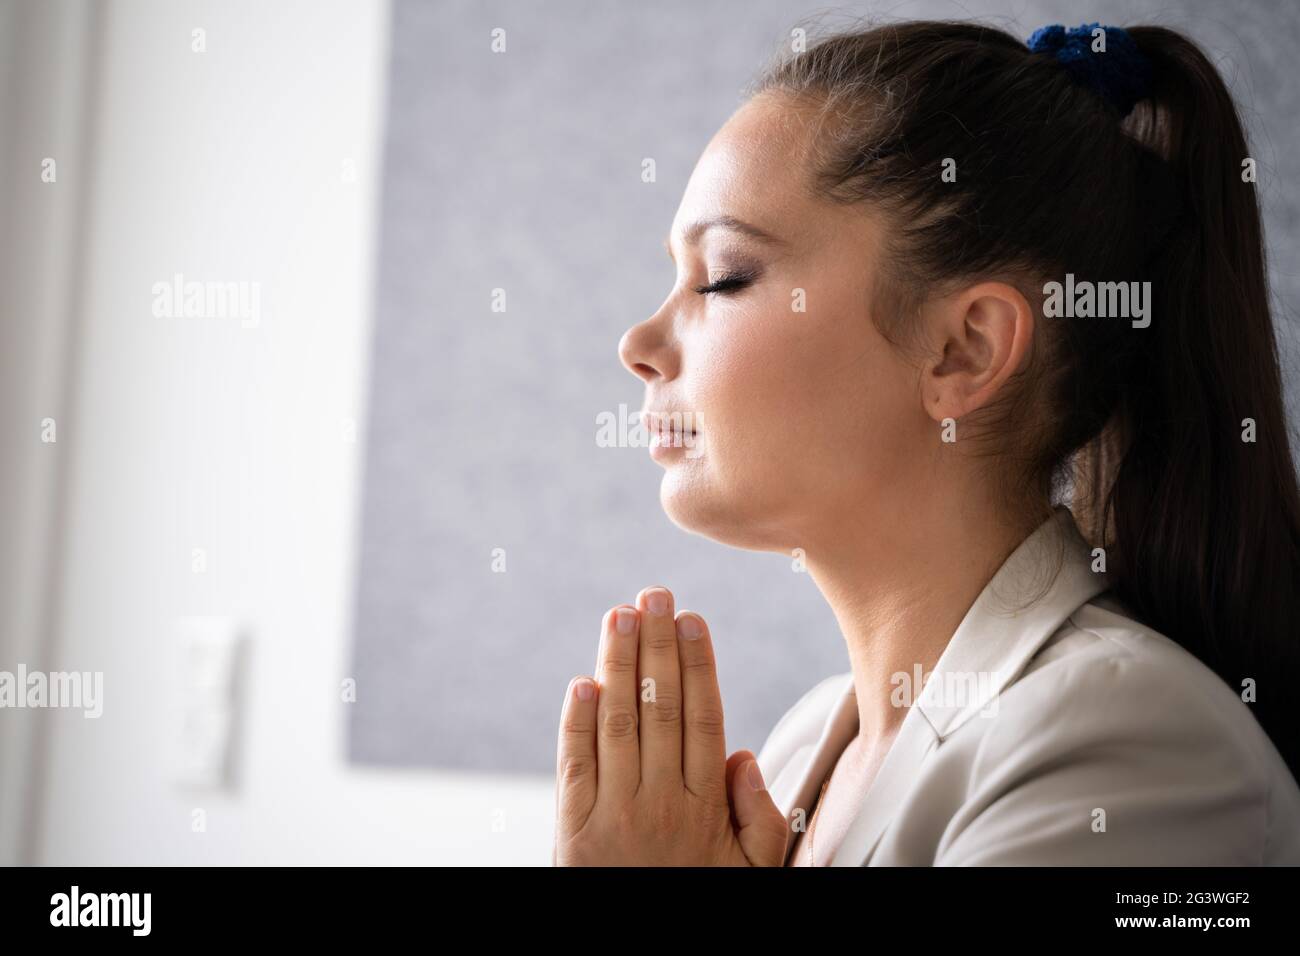 Pondering Thinking Contemplative Woman. Religious Female Prayer Stock Photo